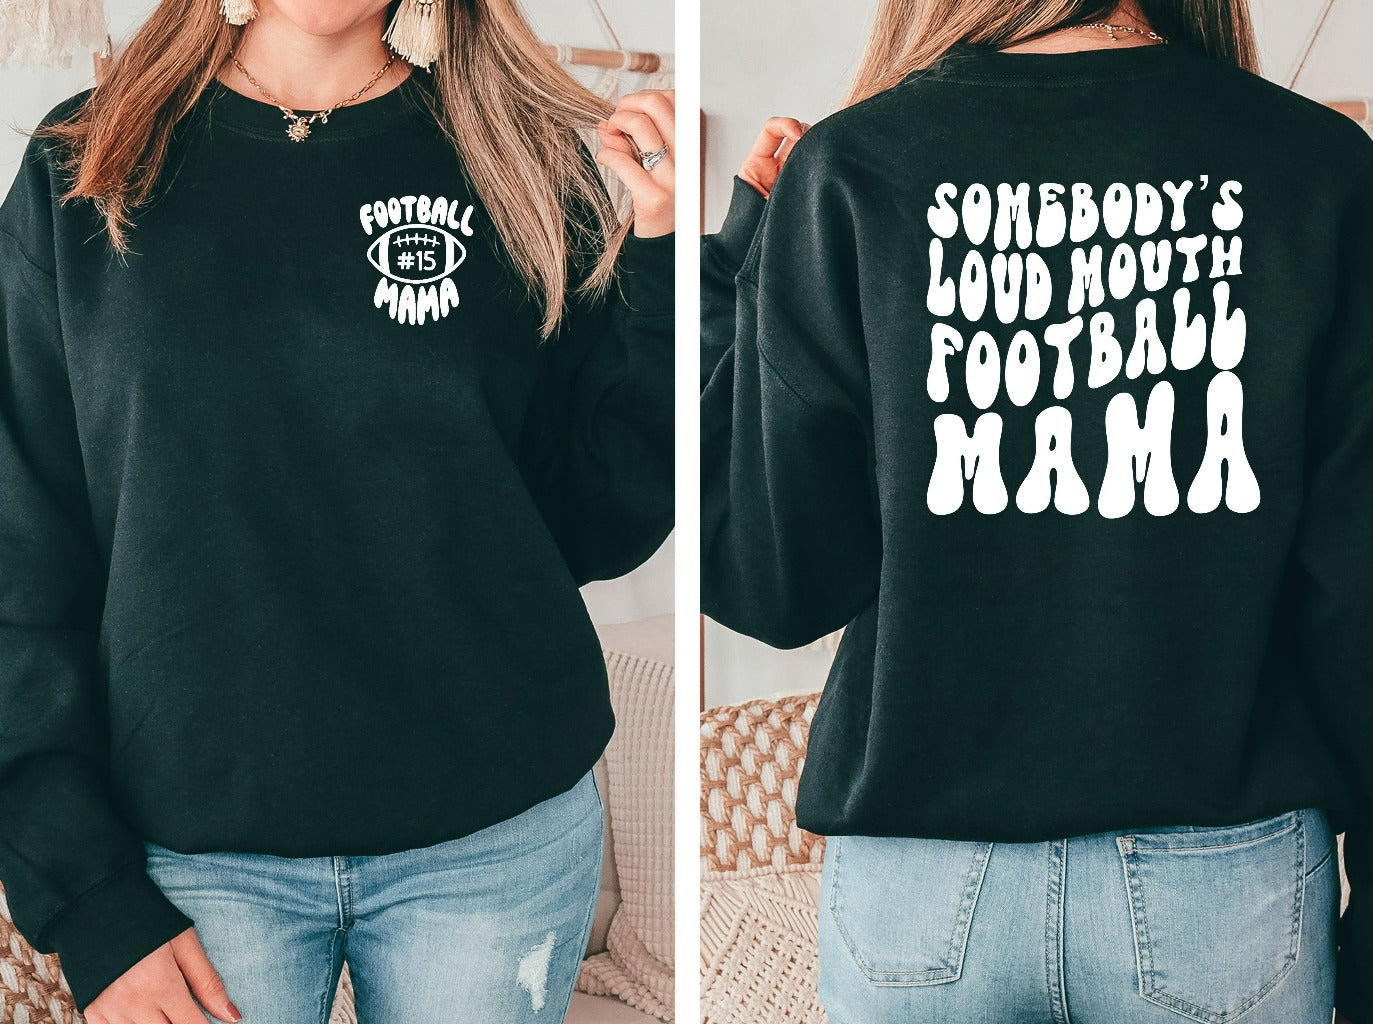 Football Mama Sweatshirt, Somebody's Loud Mouth Football Mama Crewneck, Football Mama Front and Back Graphic, Funny Football Mom Sweater